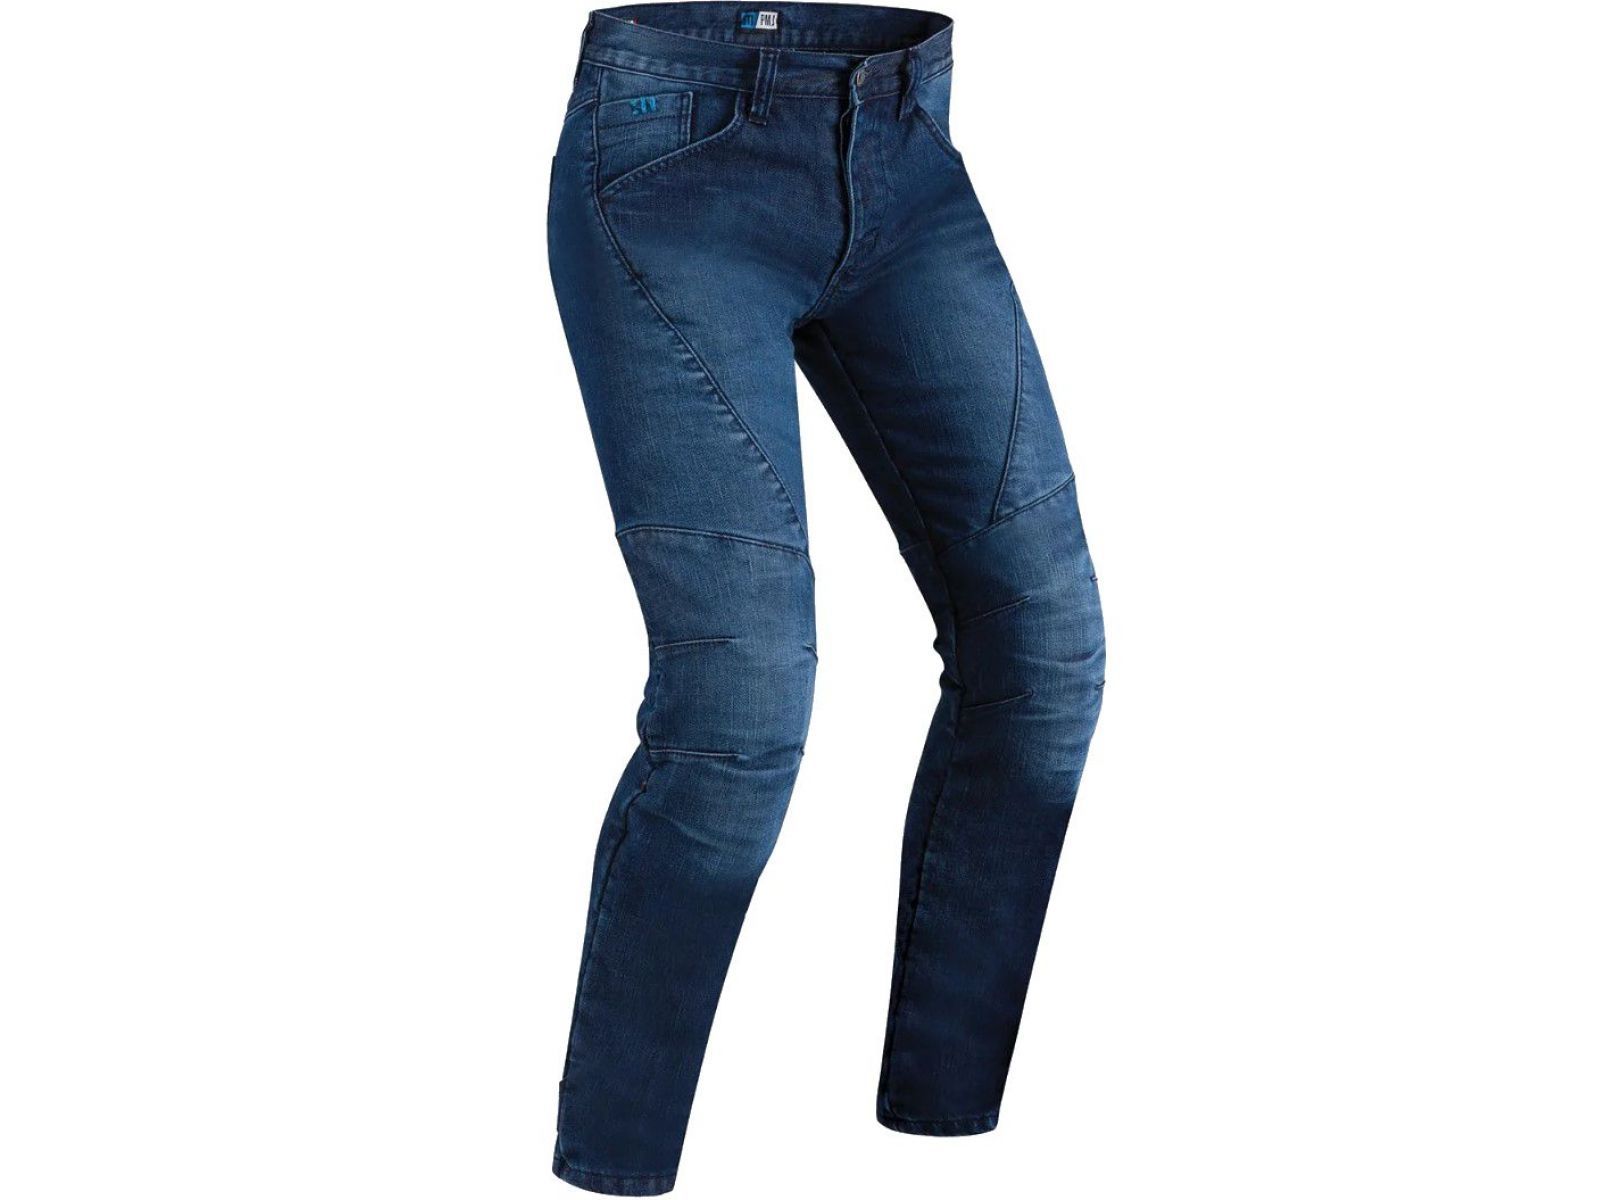 Мотоджинсы PROmo Jeans Titanium Blue